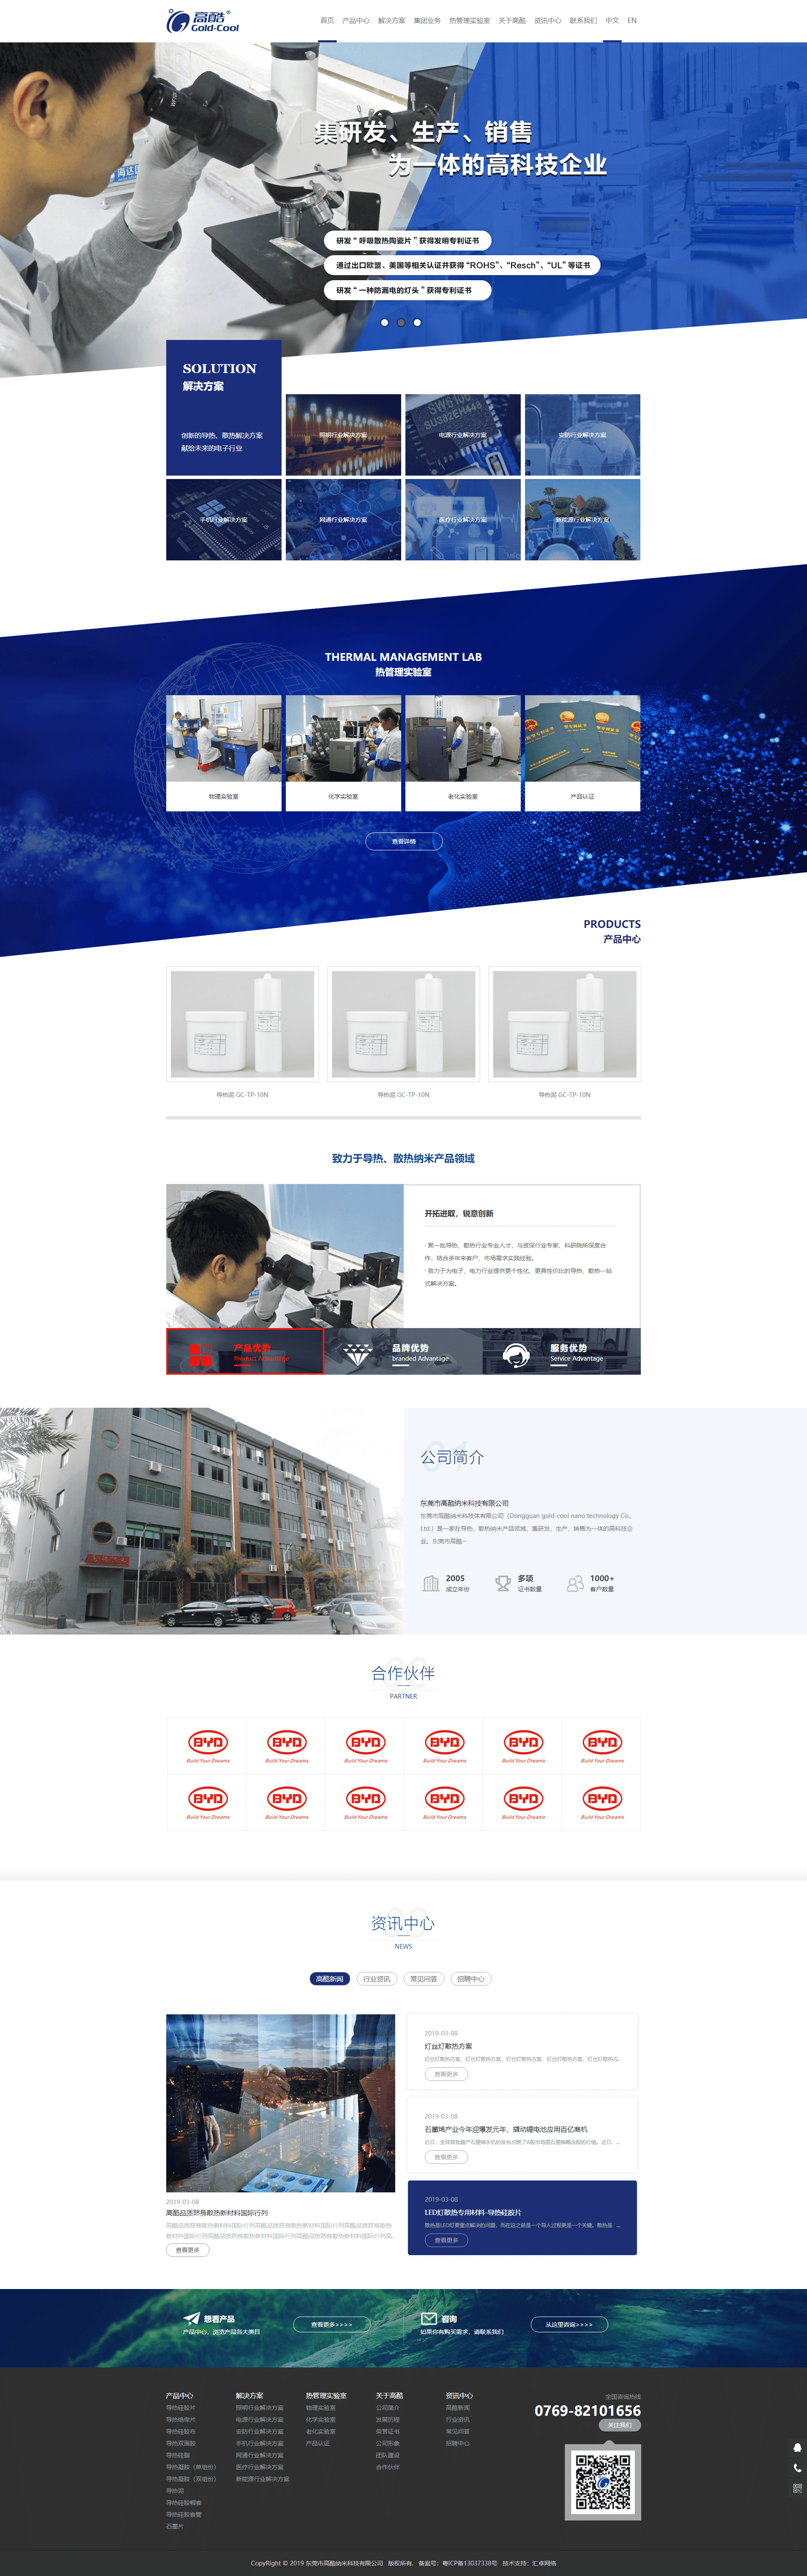 Pbootcms纳米科技公司网站模板